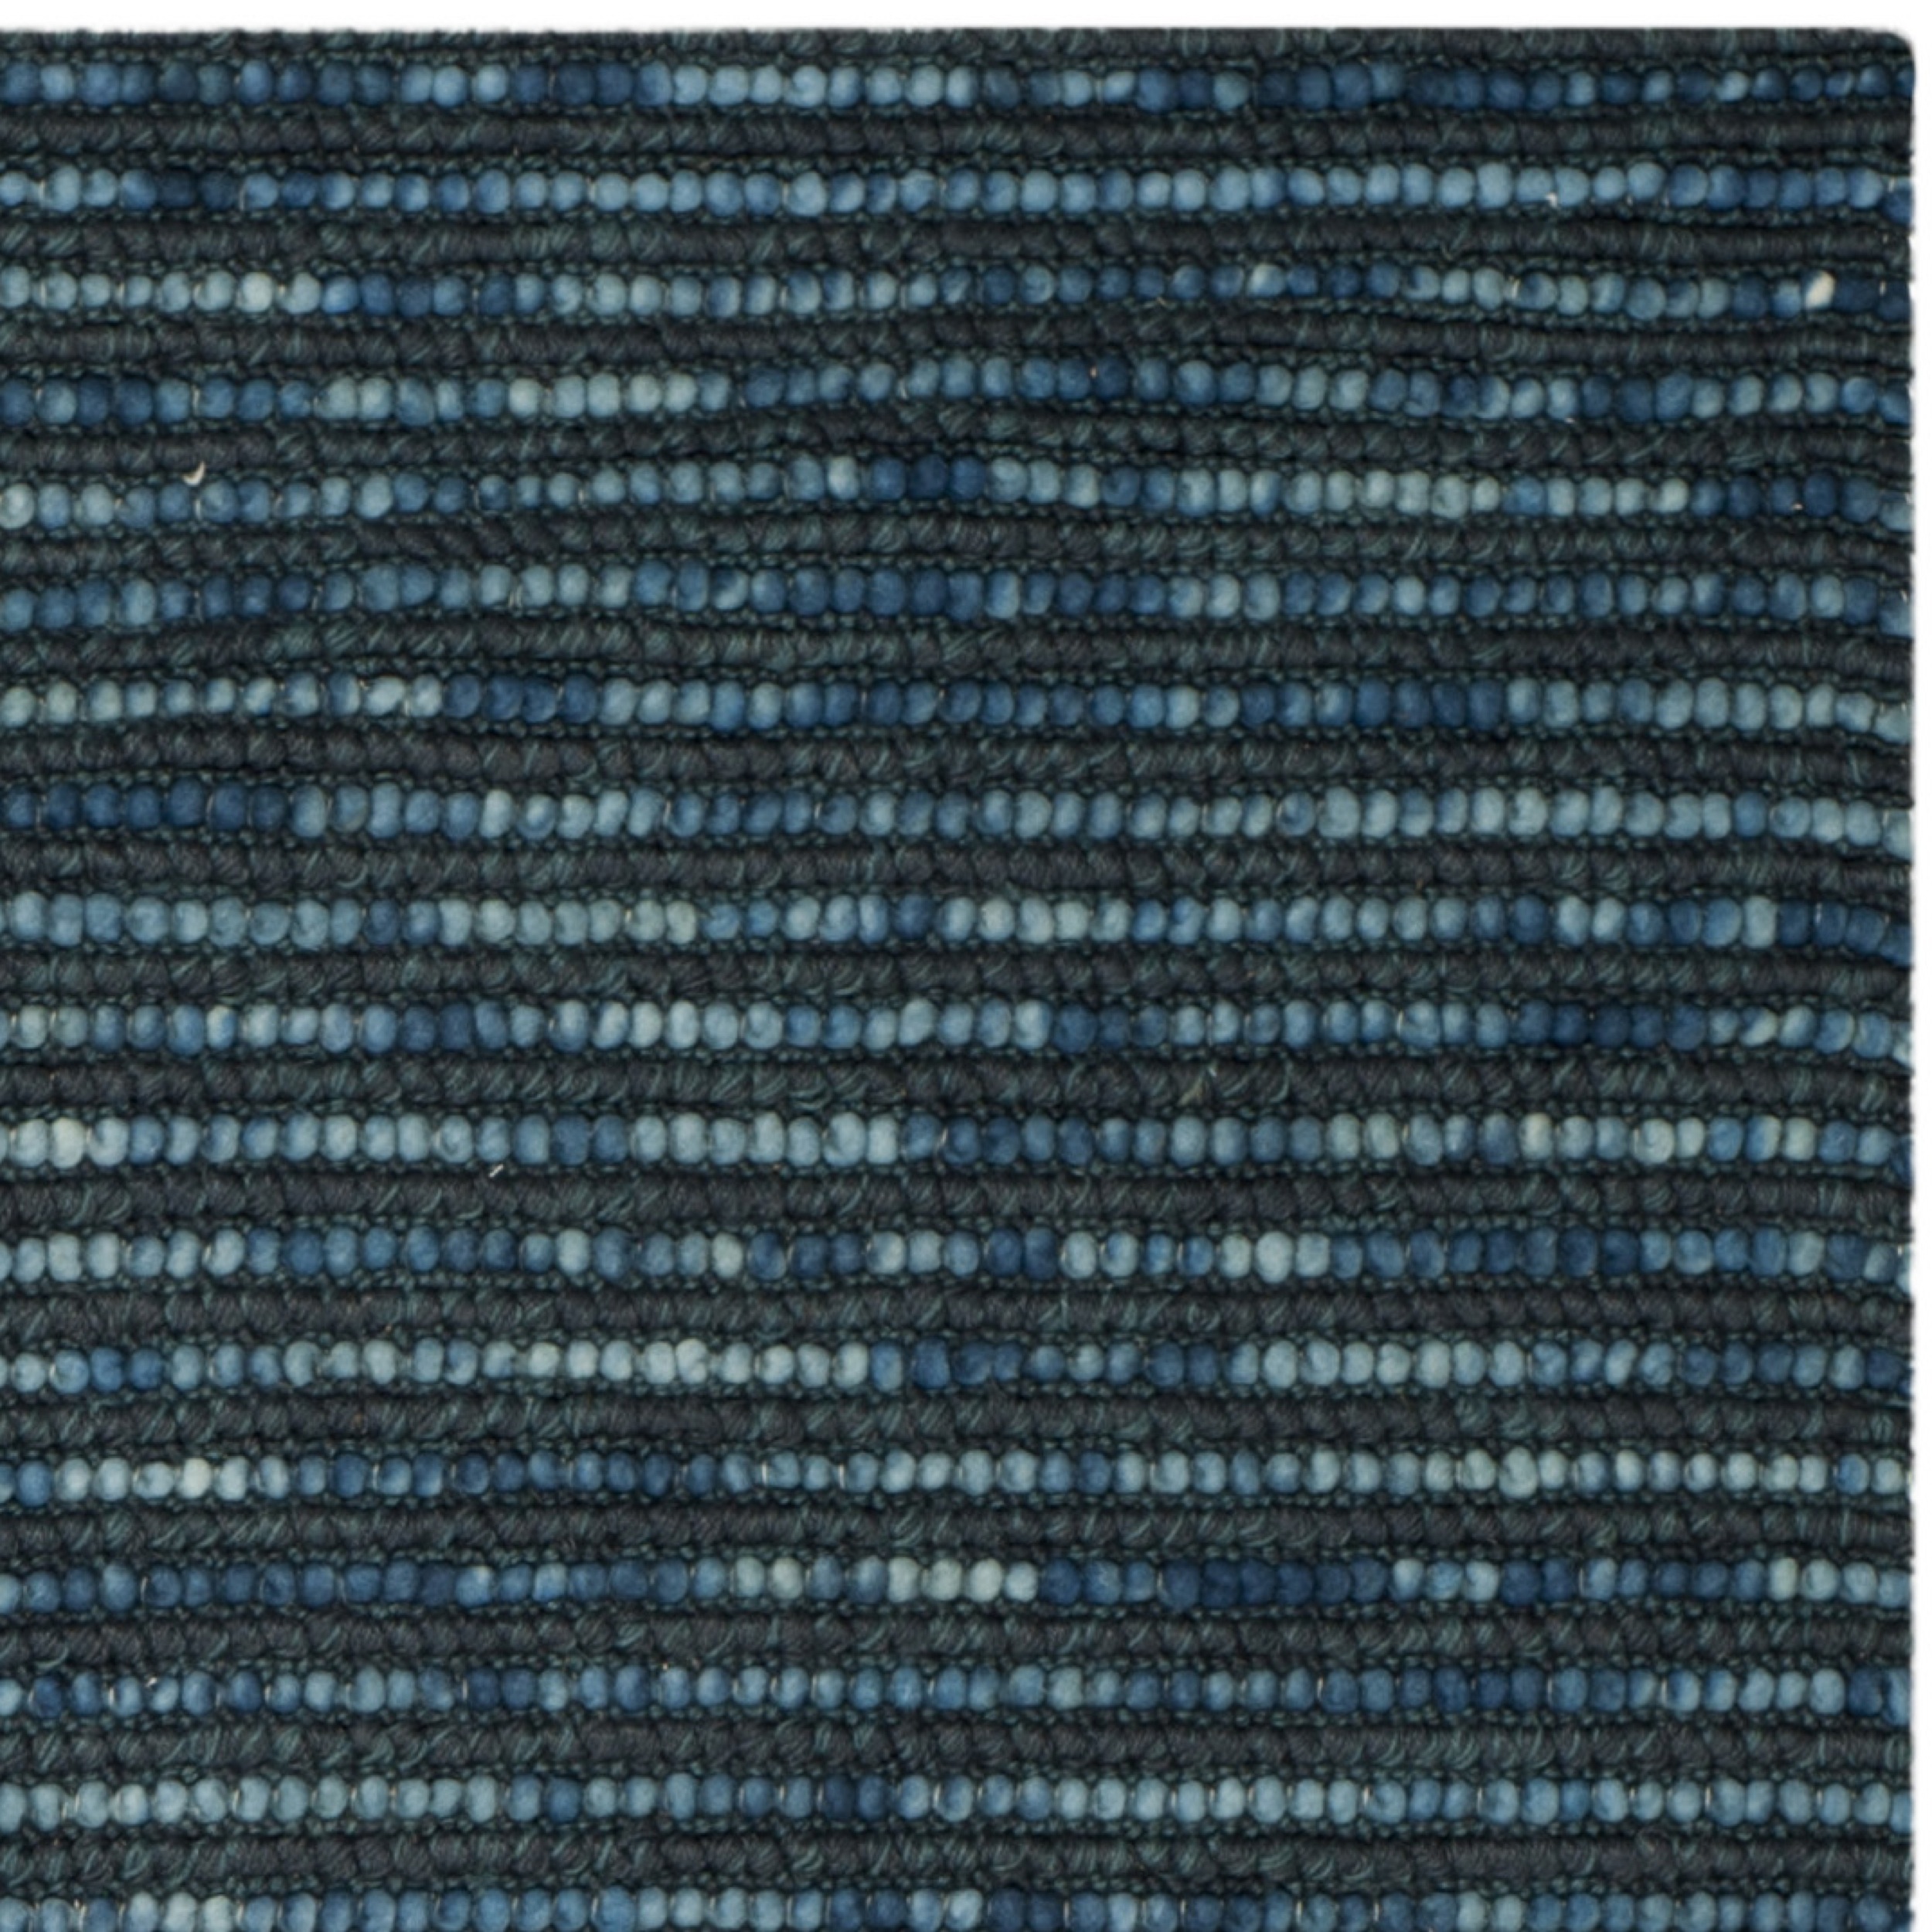 SAFAVIEH Bohemian Nel Transitional Braided Striped Area Rug, Dark Blue/Multi, 11' x 15' - image 4 of 5